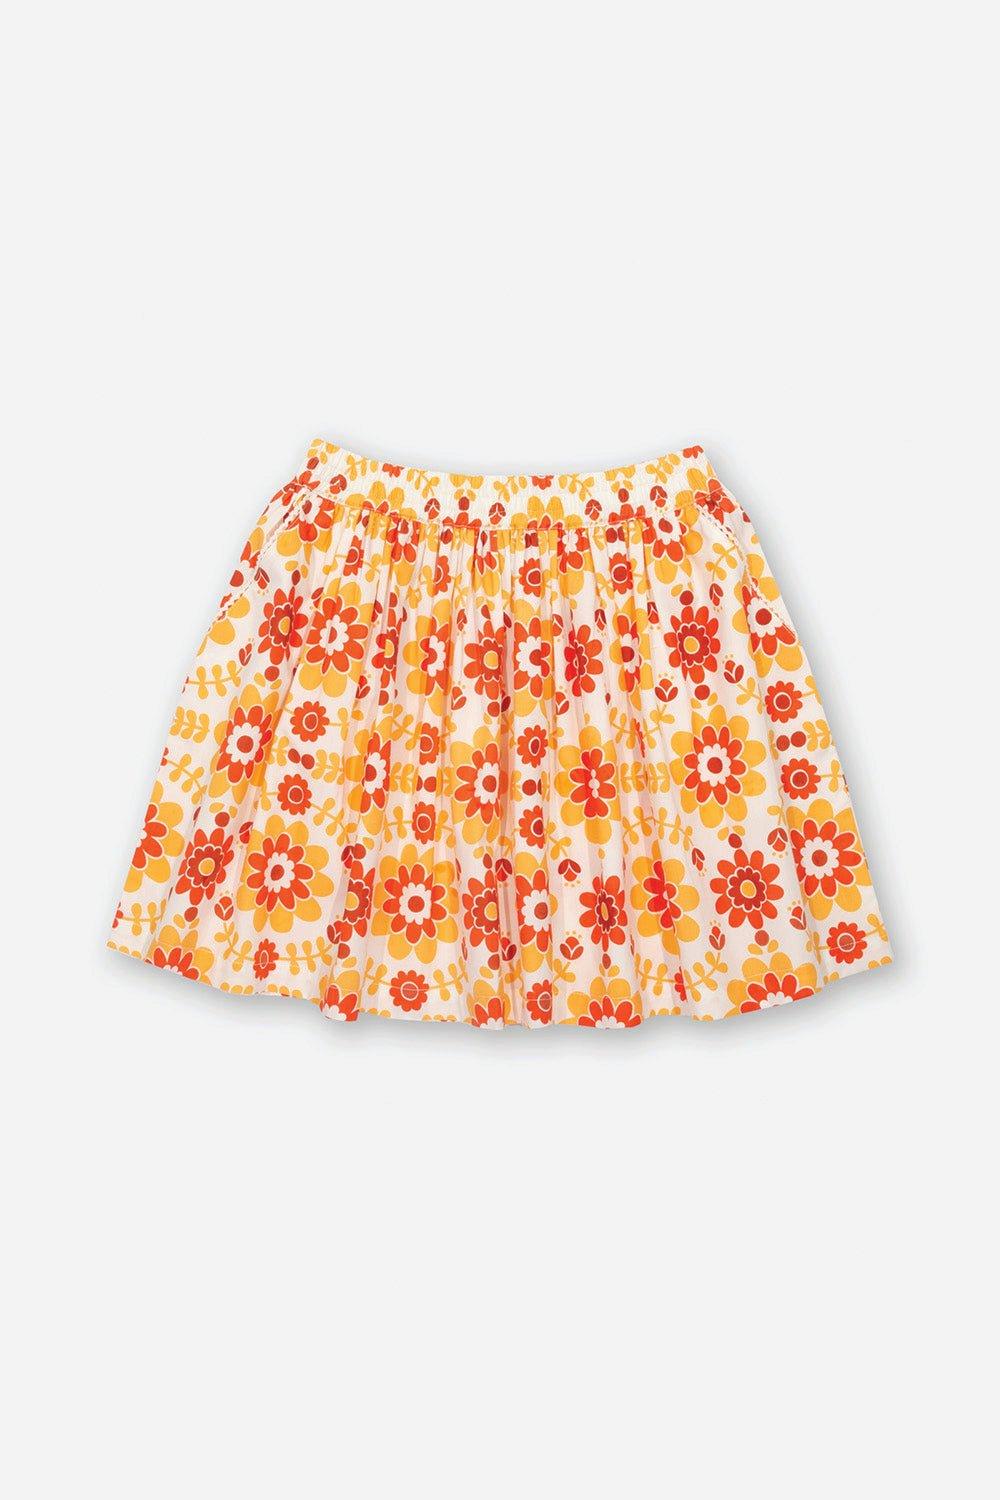 Groovy Floral Skirt